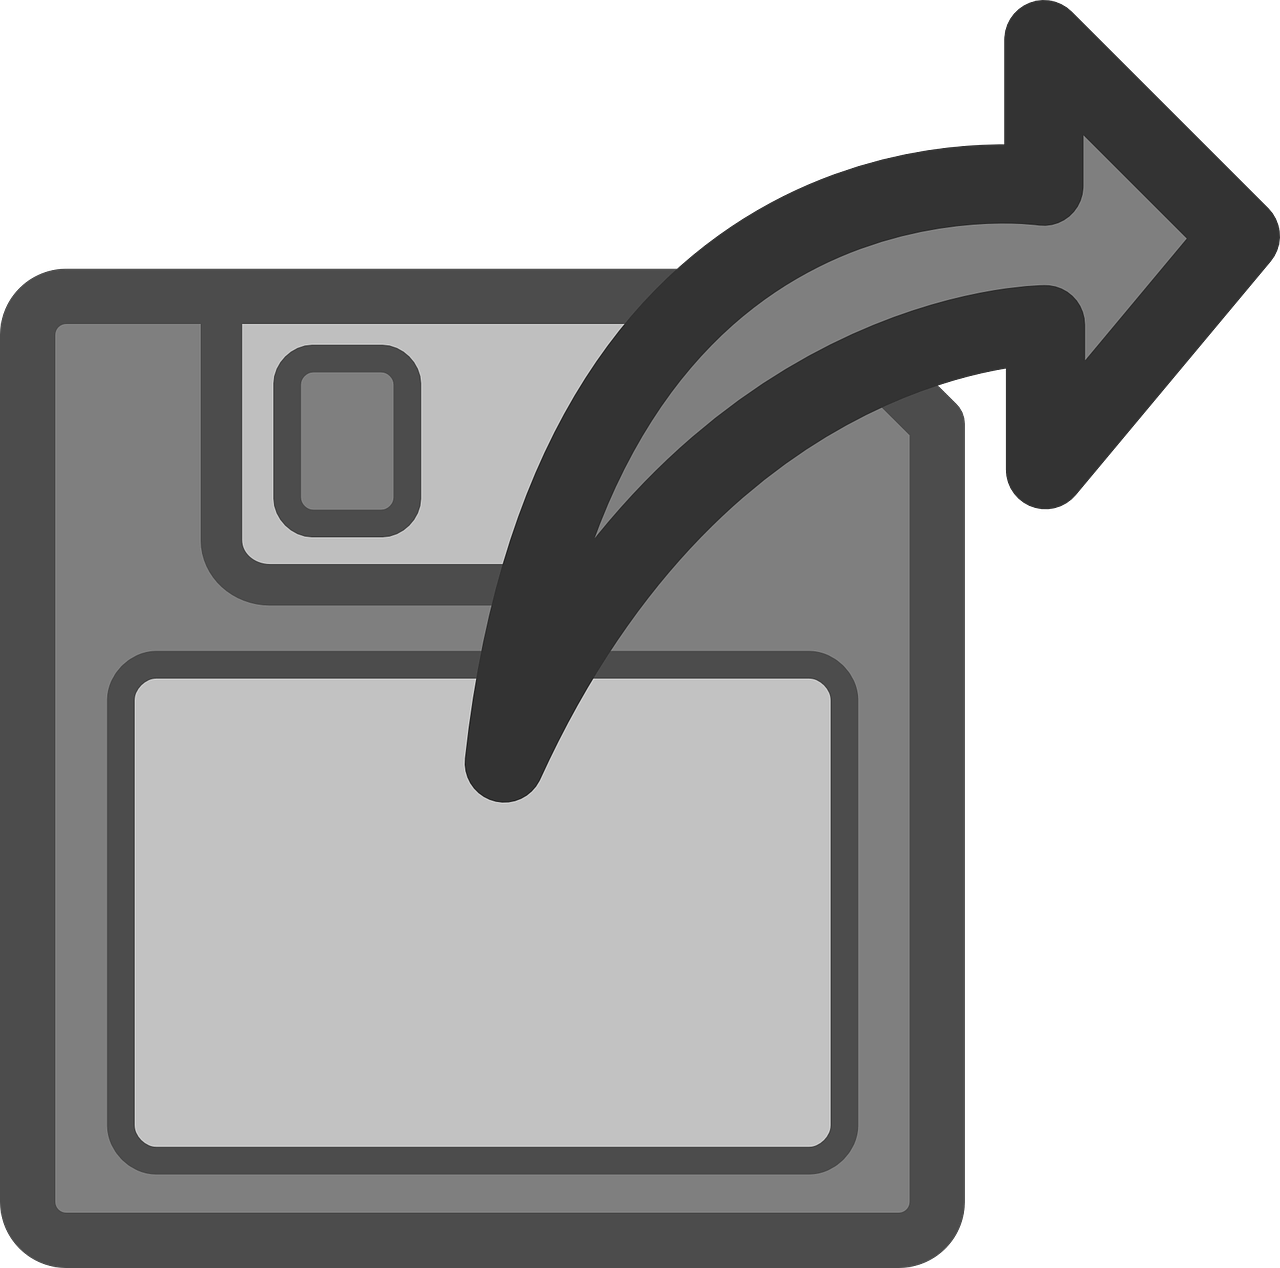 floppy disk import save free photo